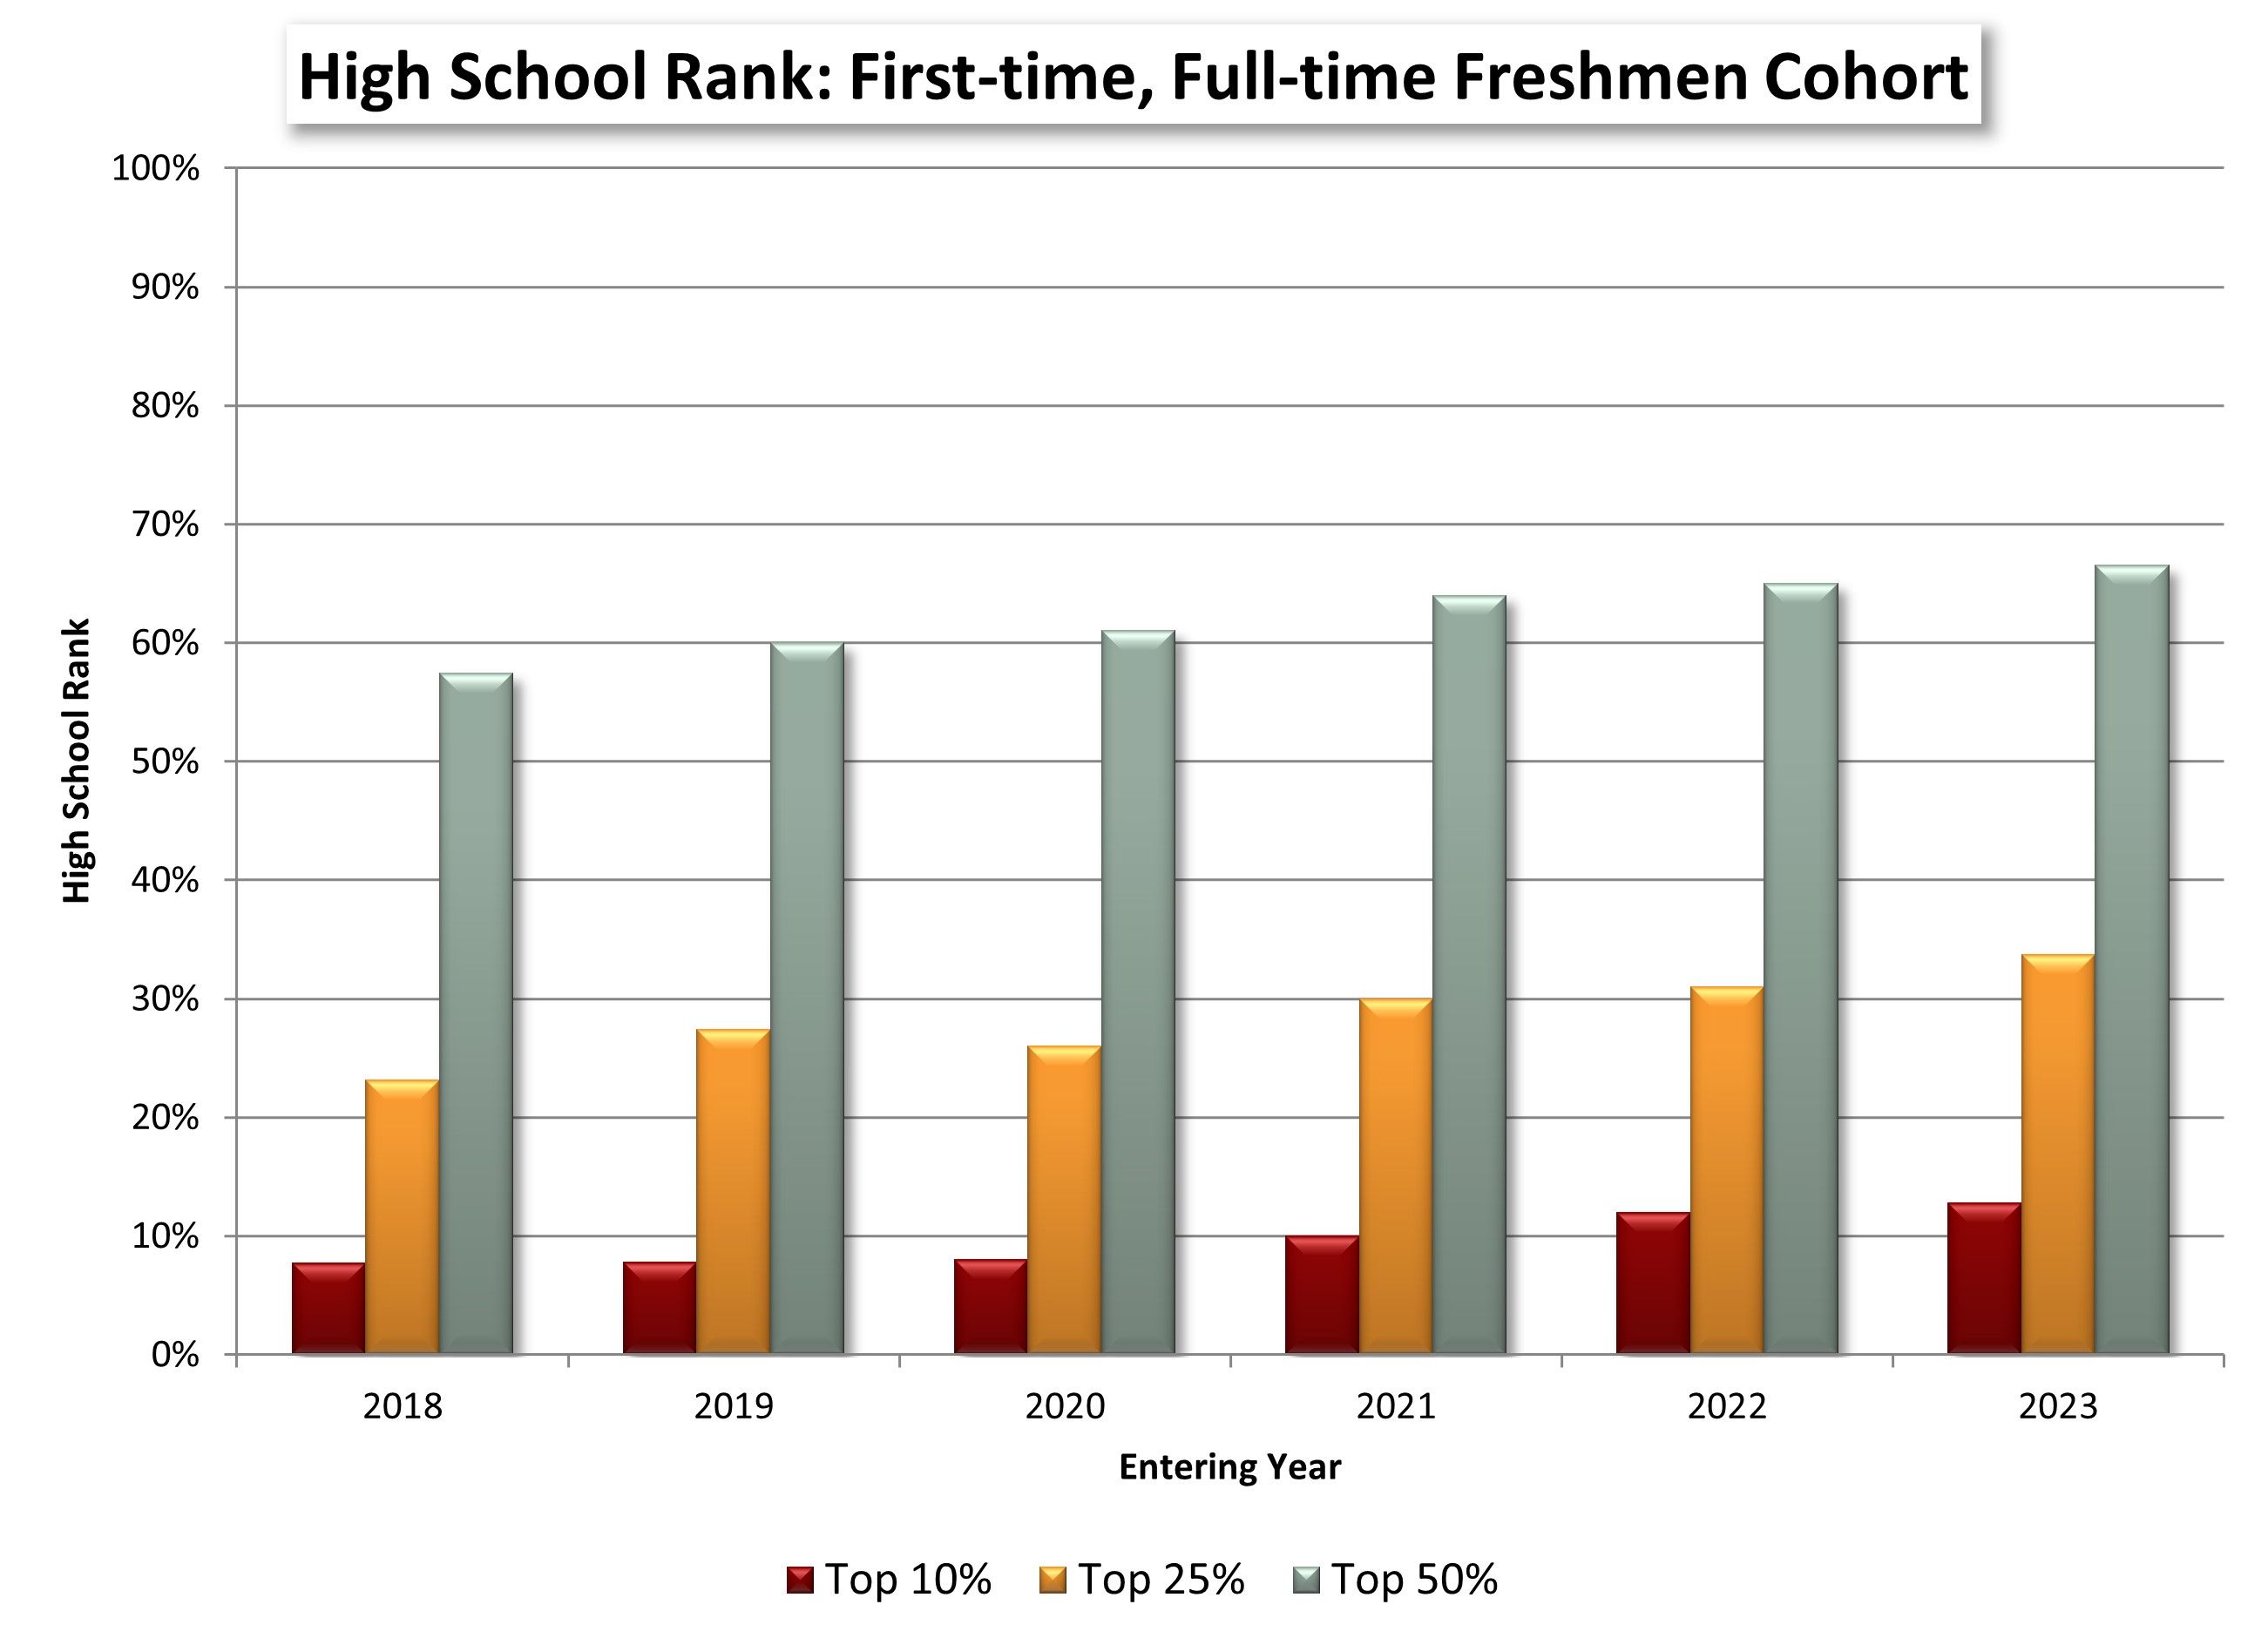 High School Rank: First-time, Full-time Freshmen Cohort chart